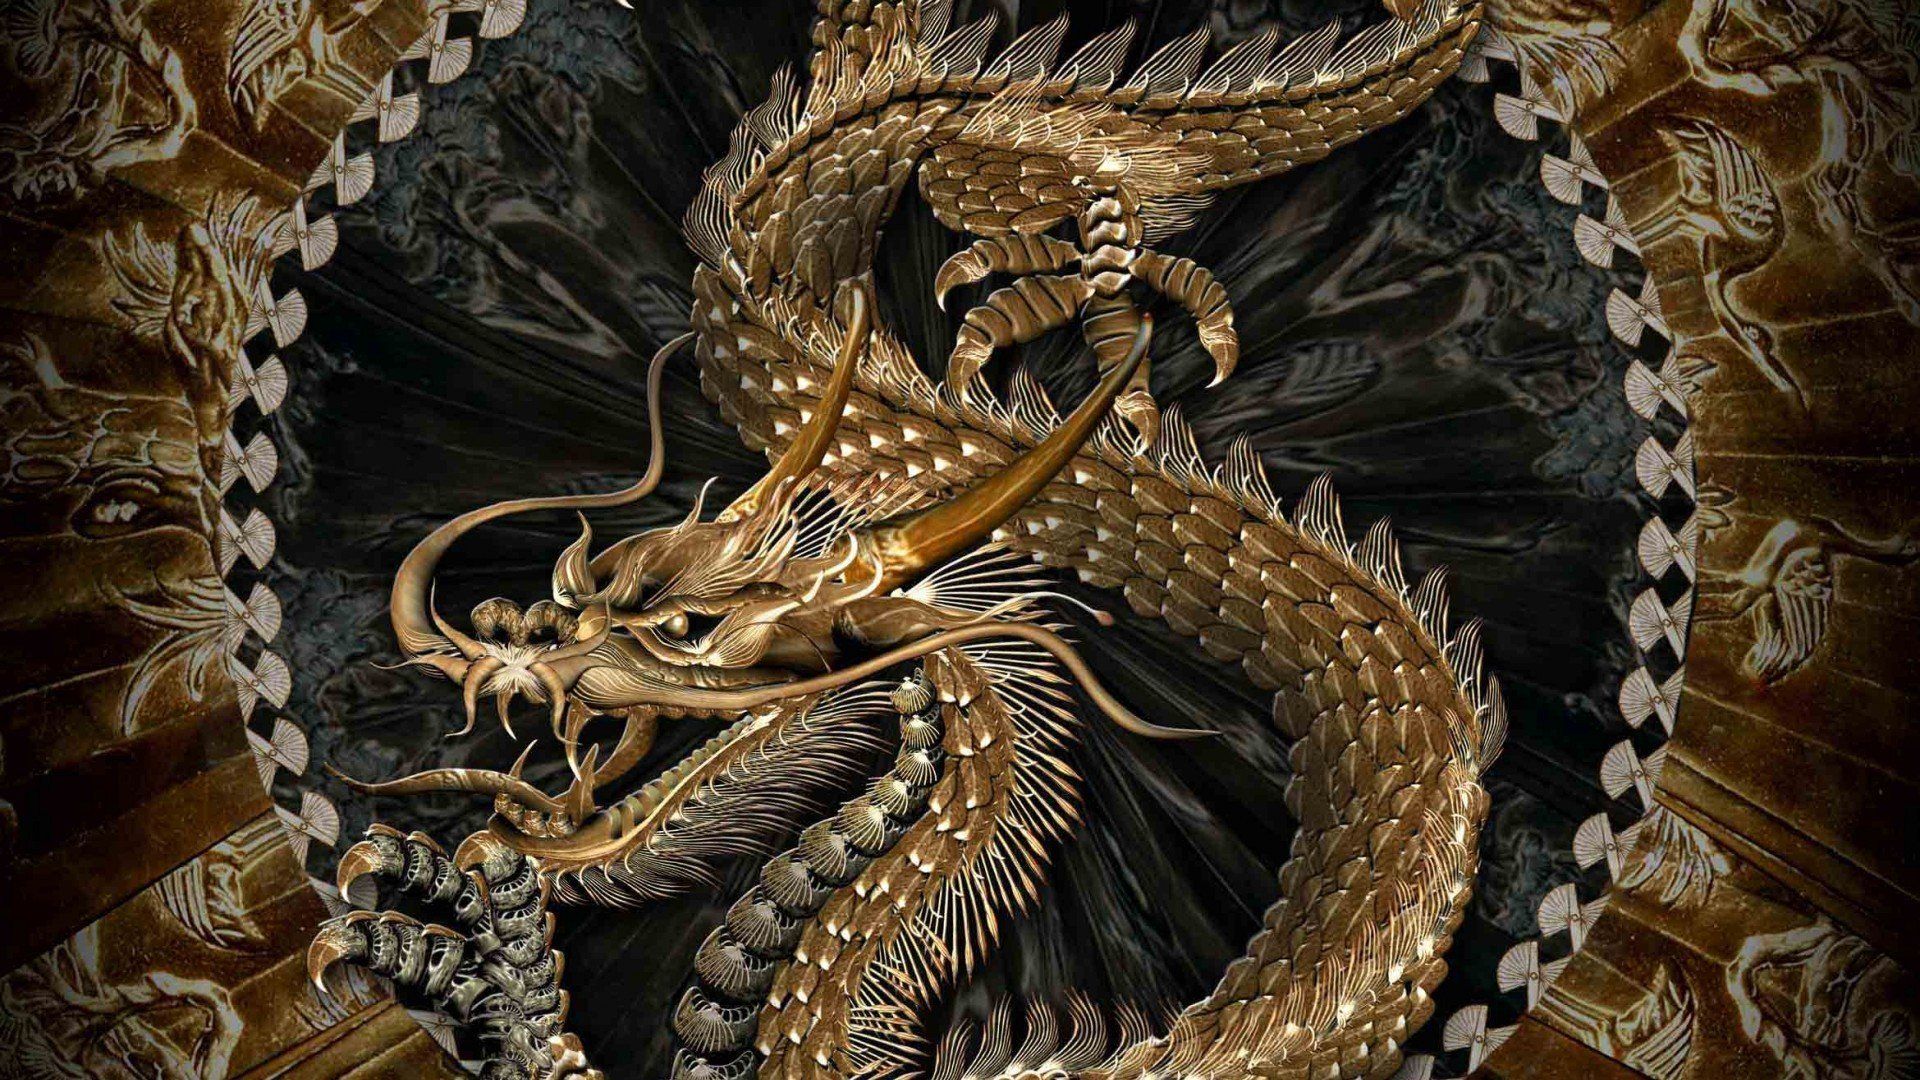 King Dragon Wallpapers